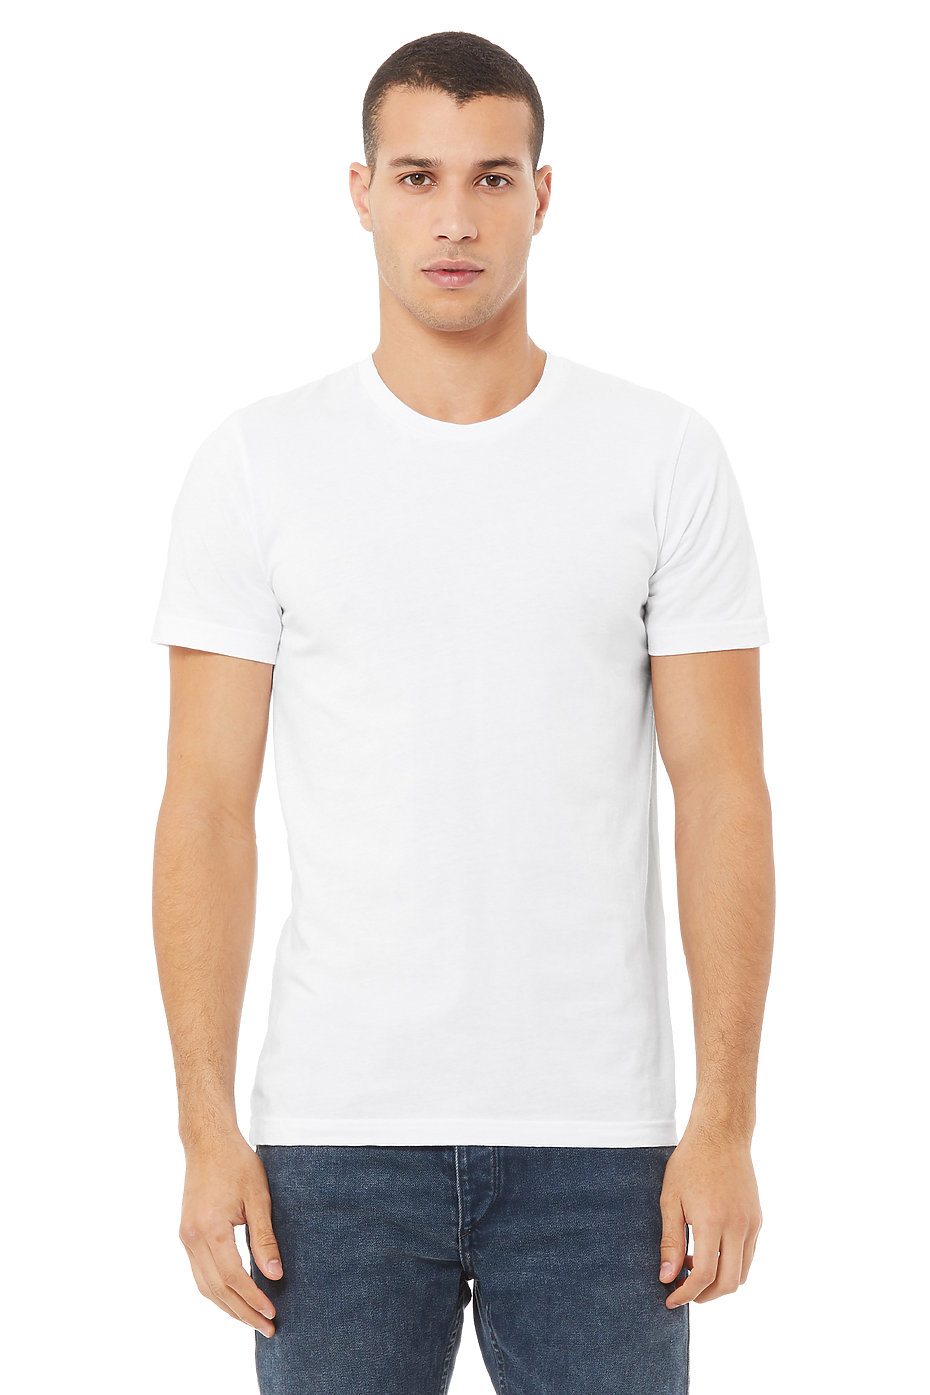 Buy Plain 100% Cotton Short Sleeve T-Shirt from Next USA